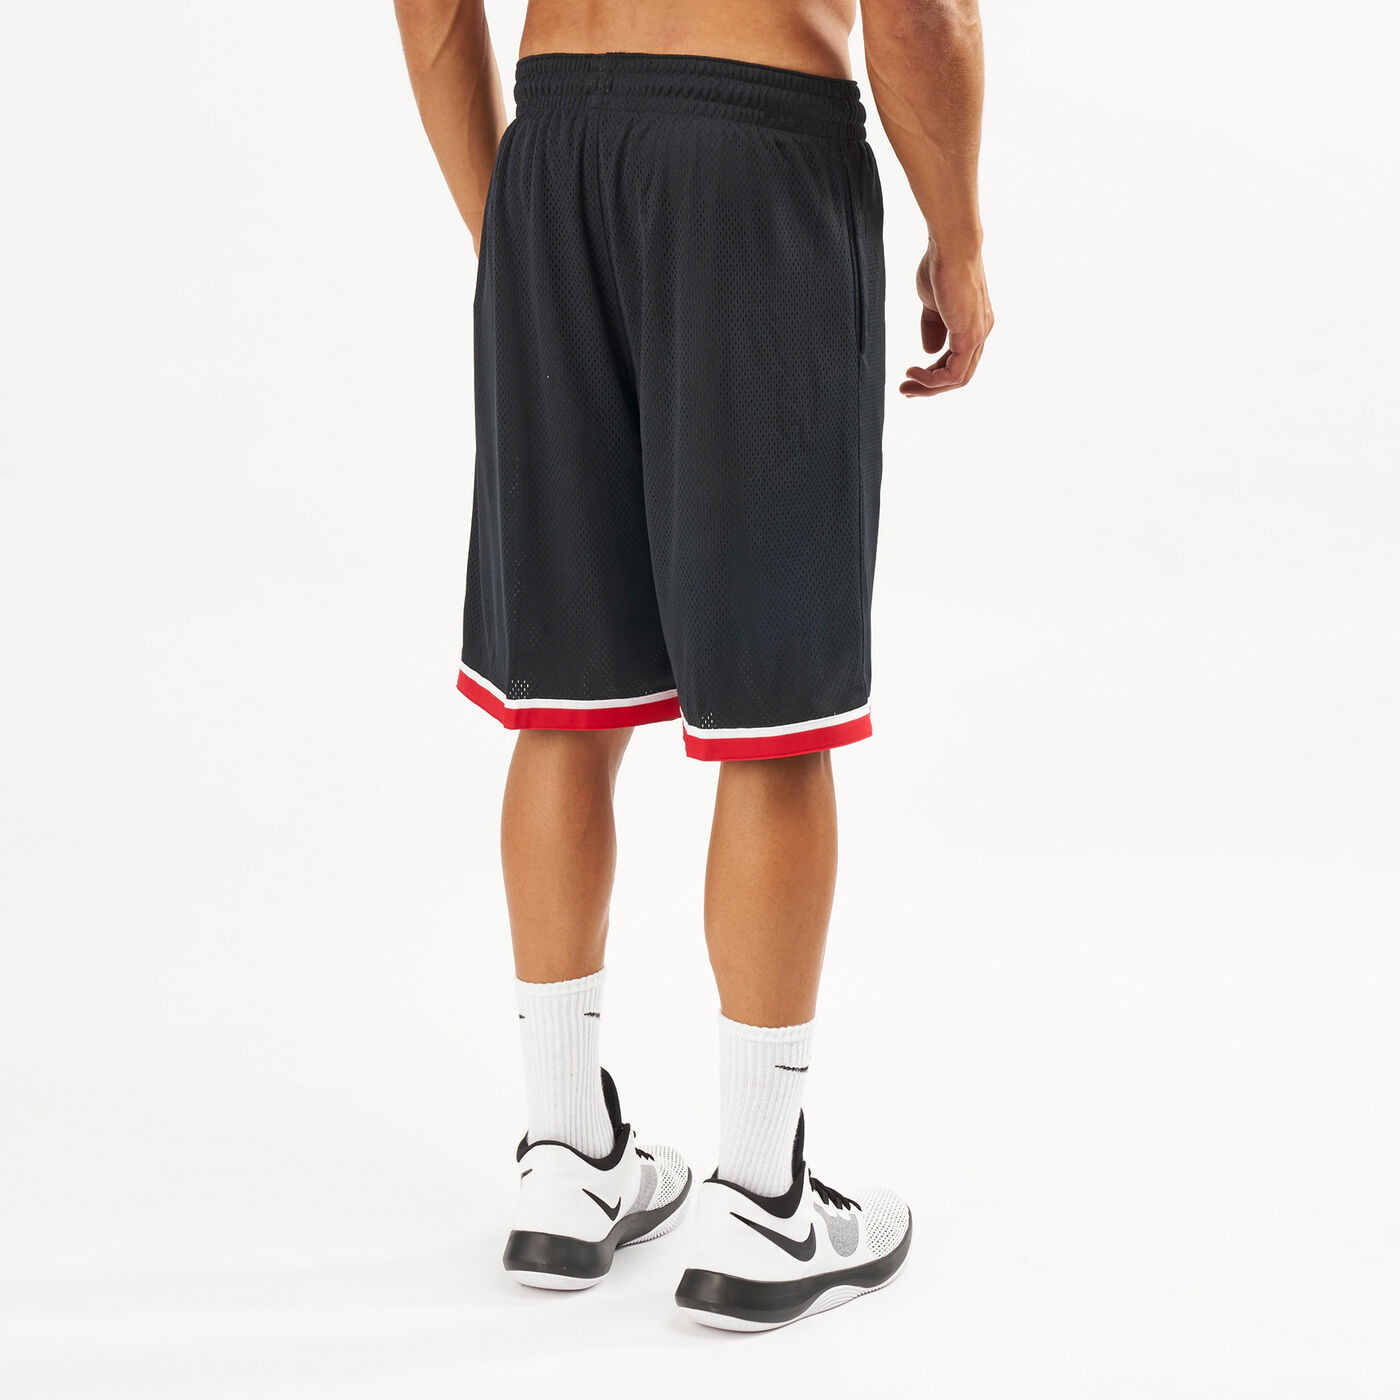 Men's Dry Classic Basketball Shorts